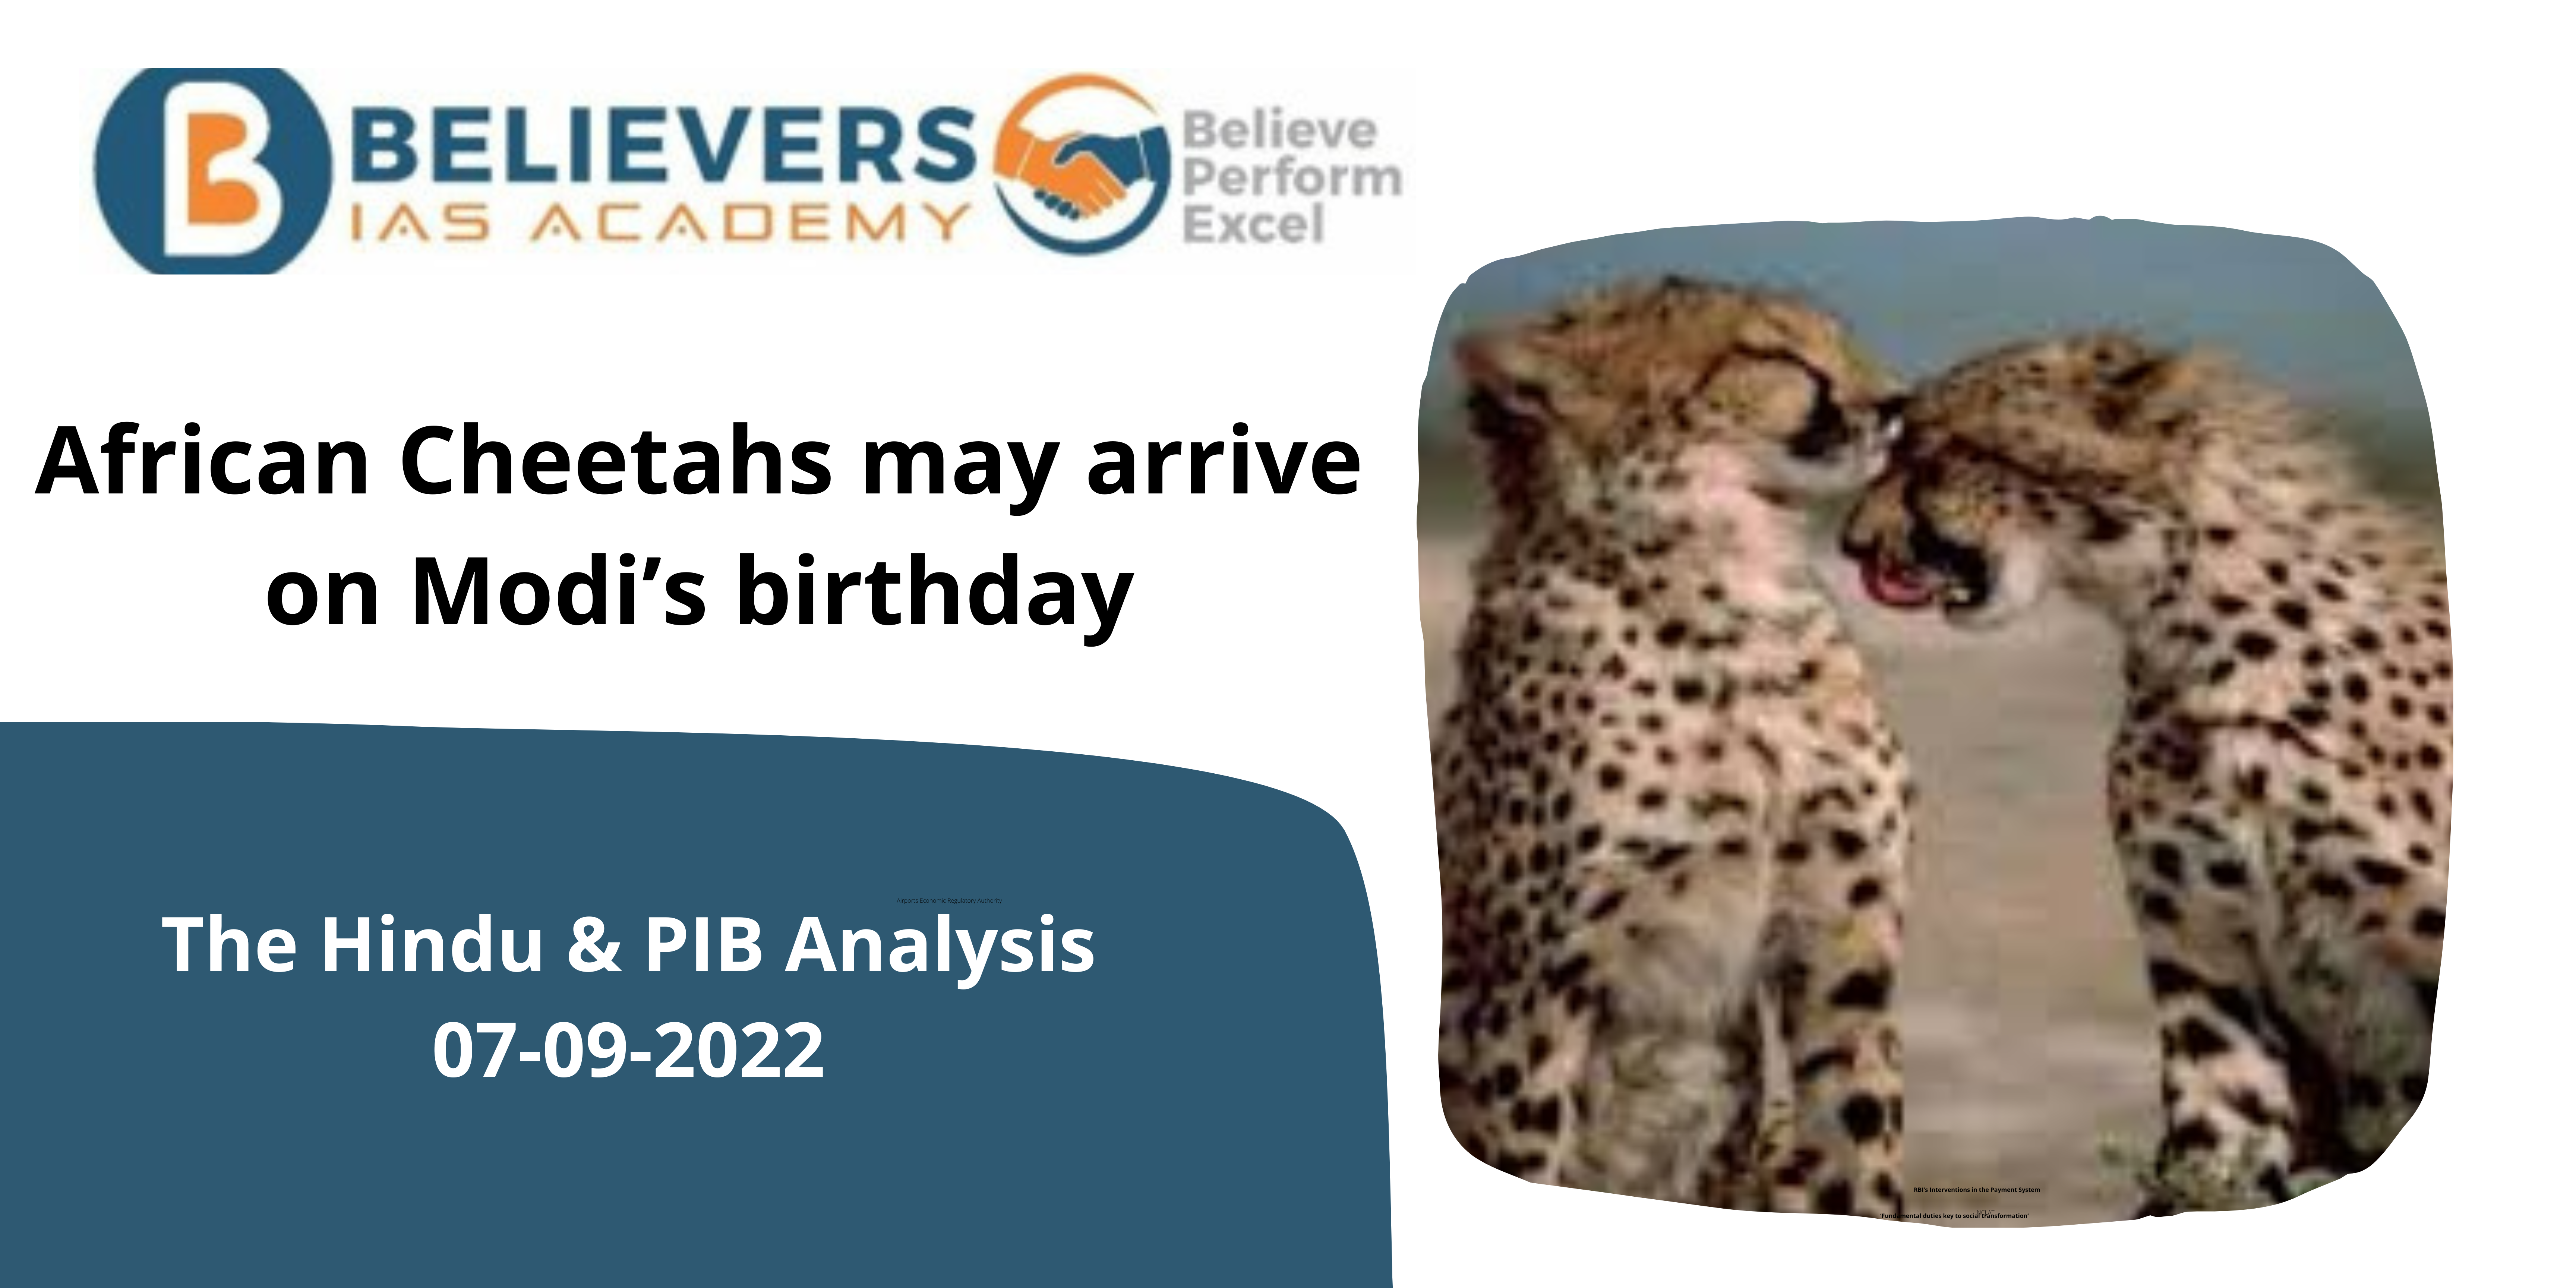 African Cheetahs may arrive on Modi’s birthday